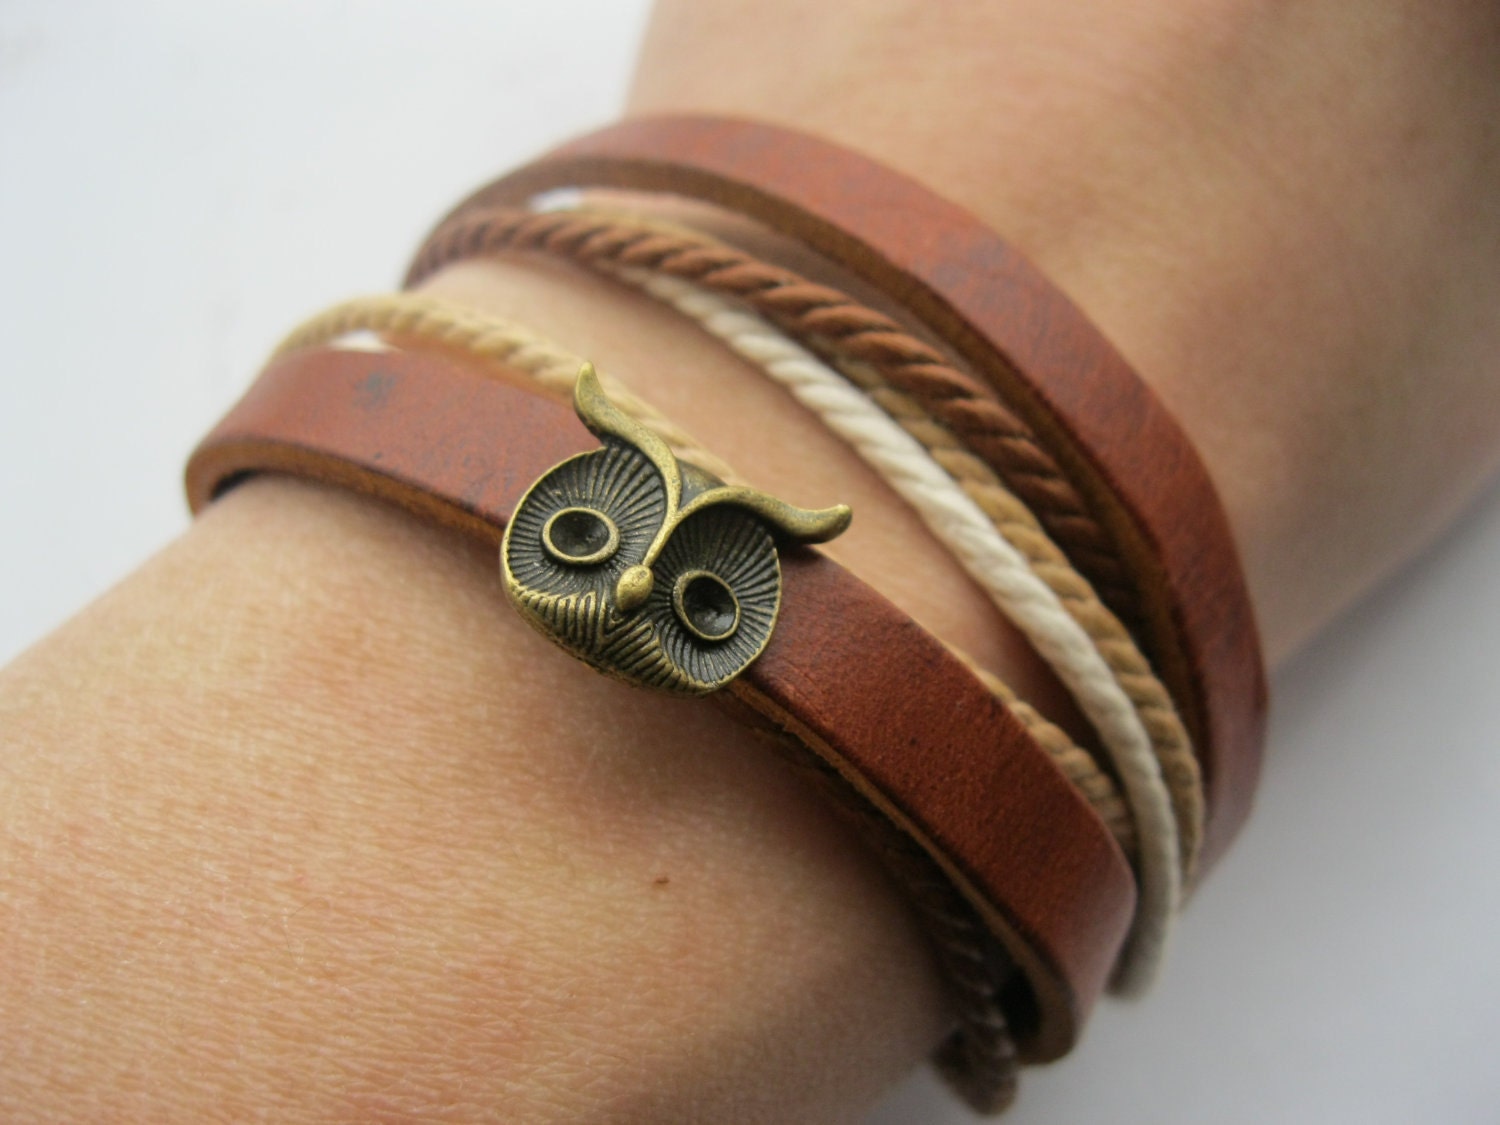 Bracelet-antique bronze owl real leather bracelet,real leather bracelet